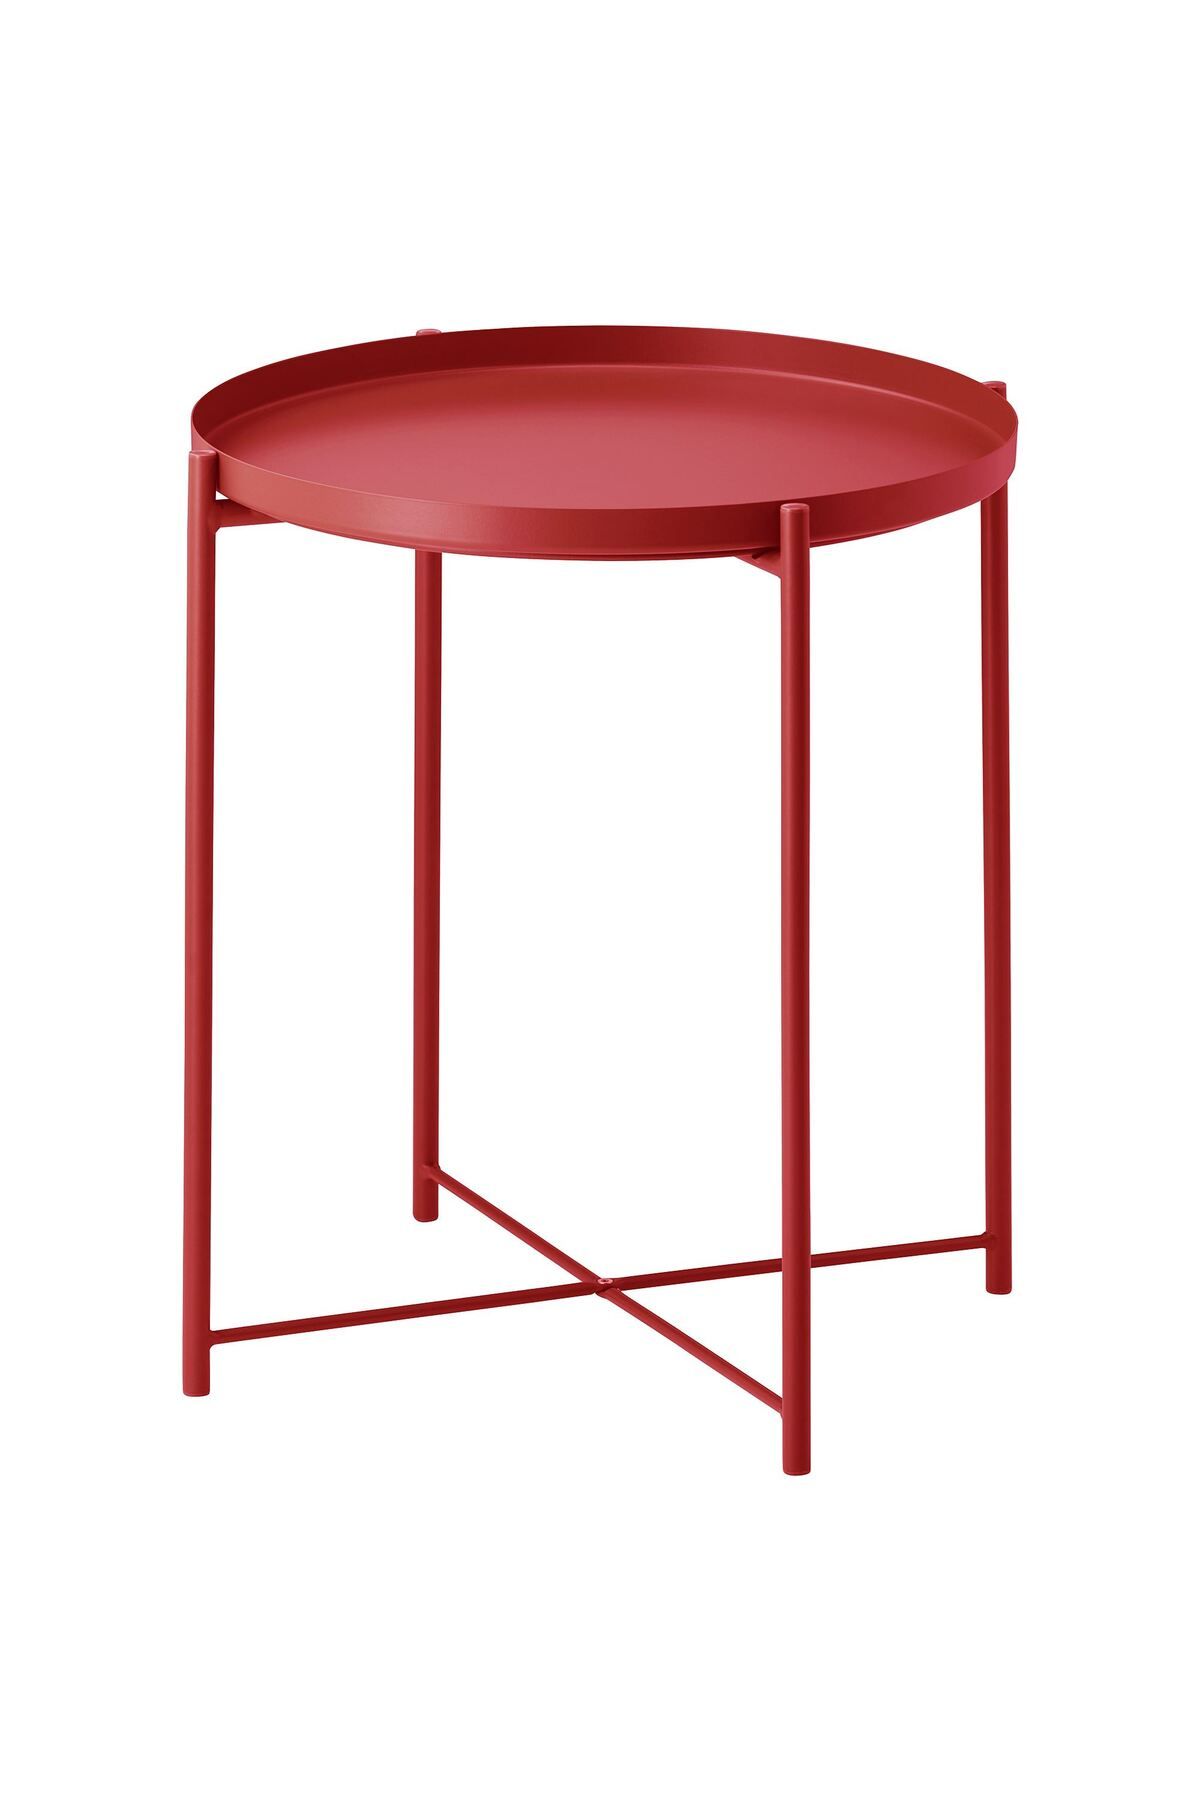 IKEA tepsili sehpa, kırmızı, 45x53 cm